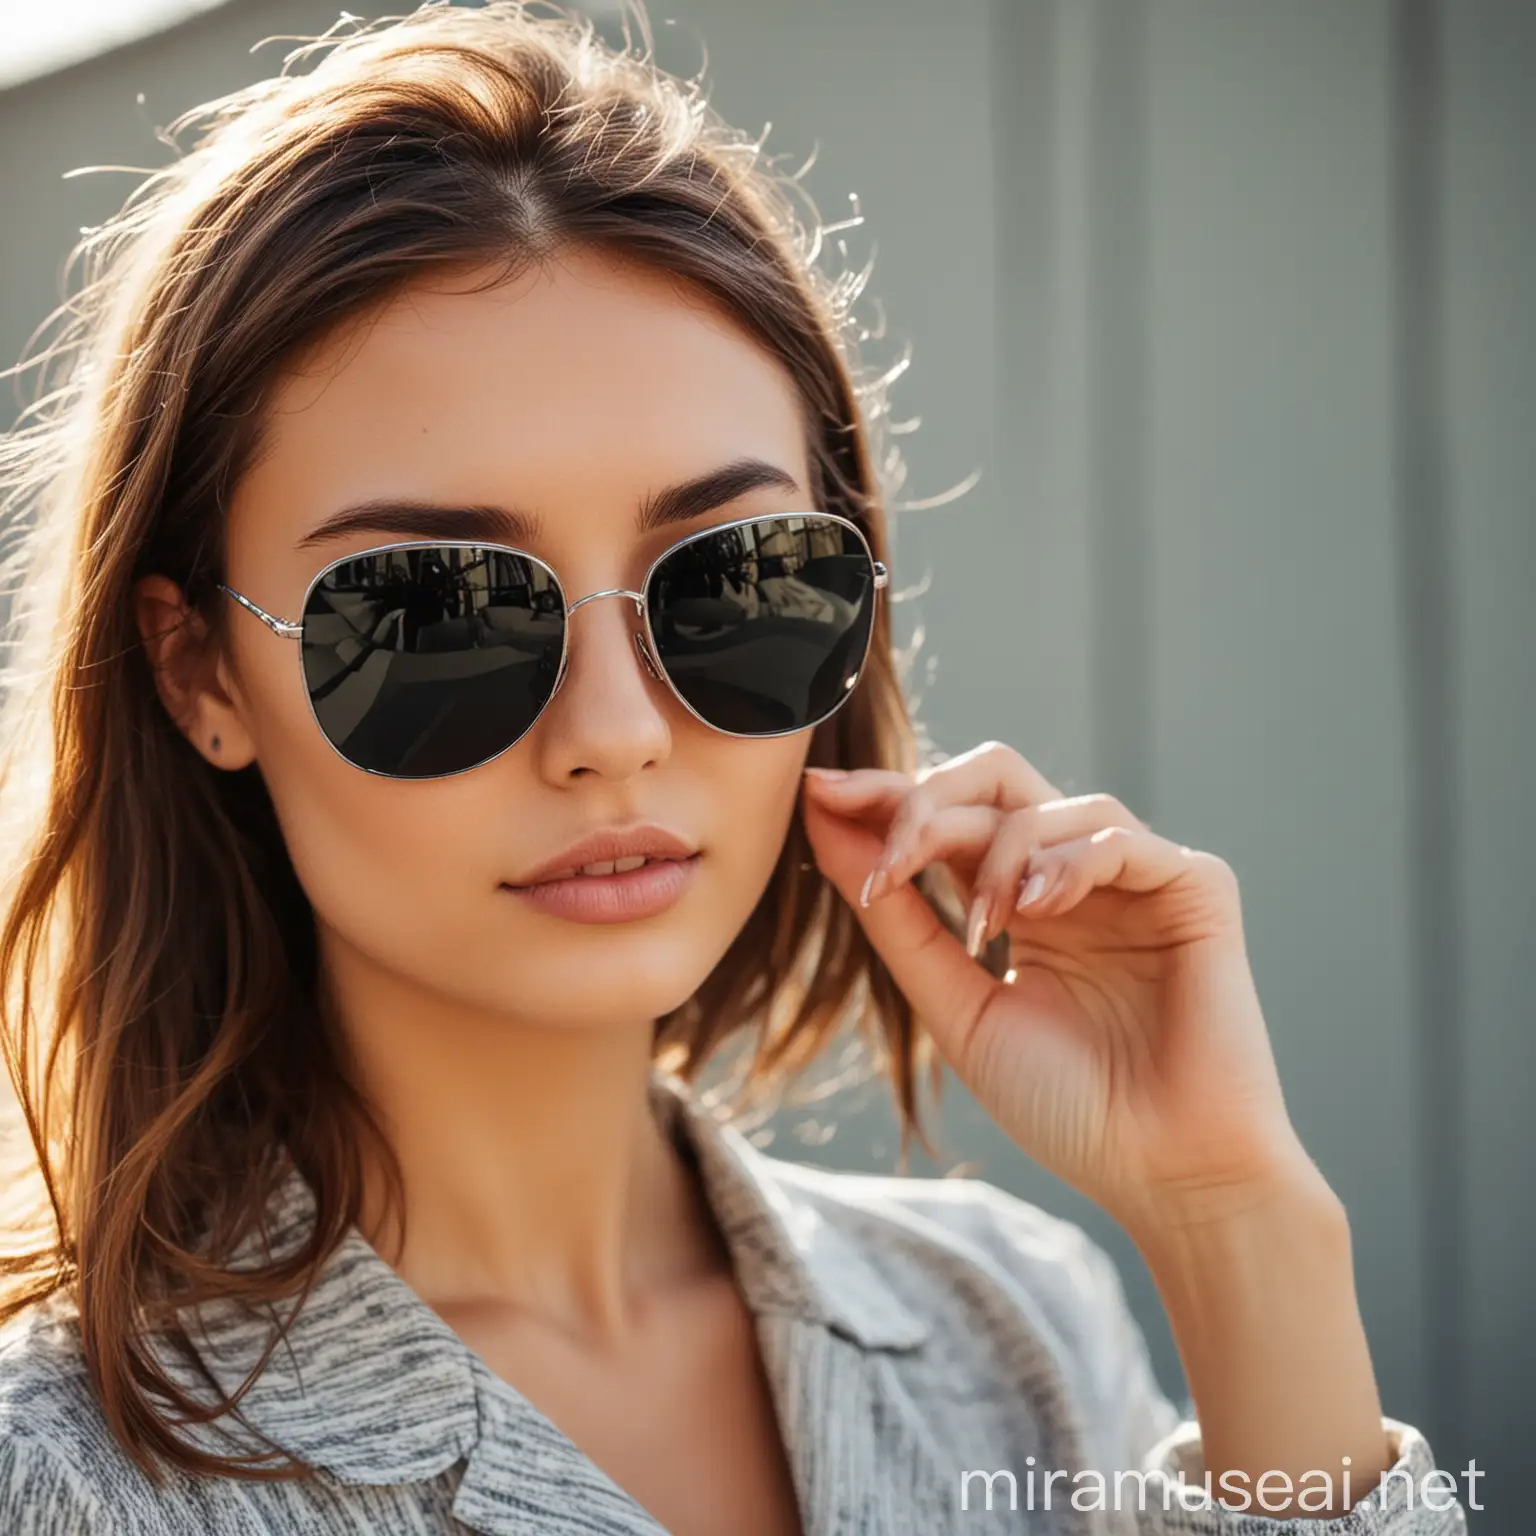 Fashion Model Wearing Sunglasses Stylish Portrait Photography